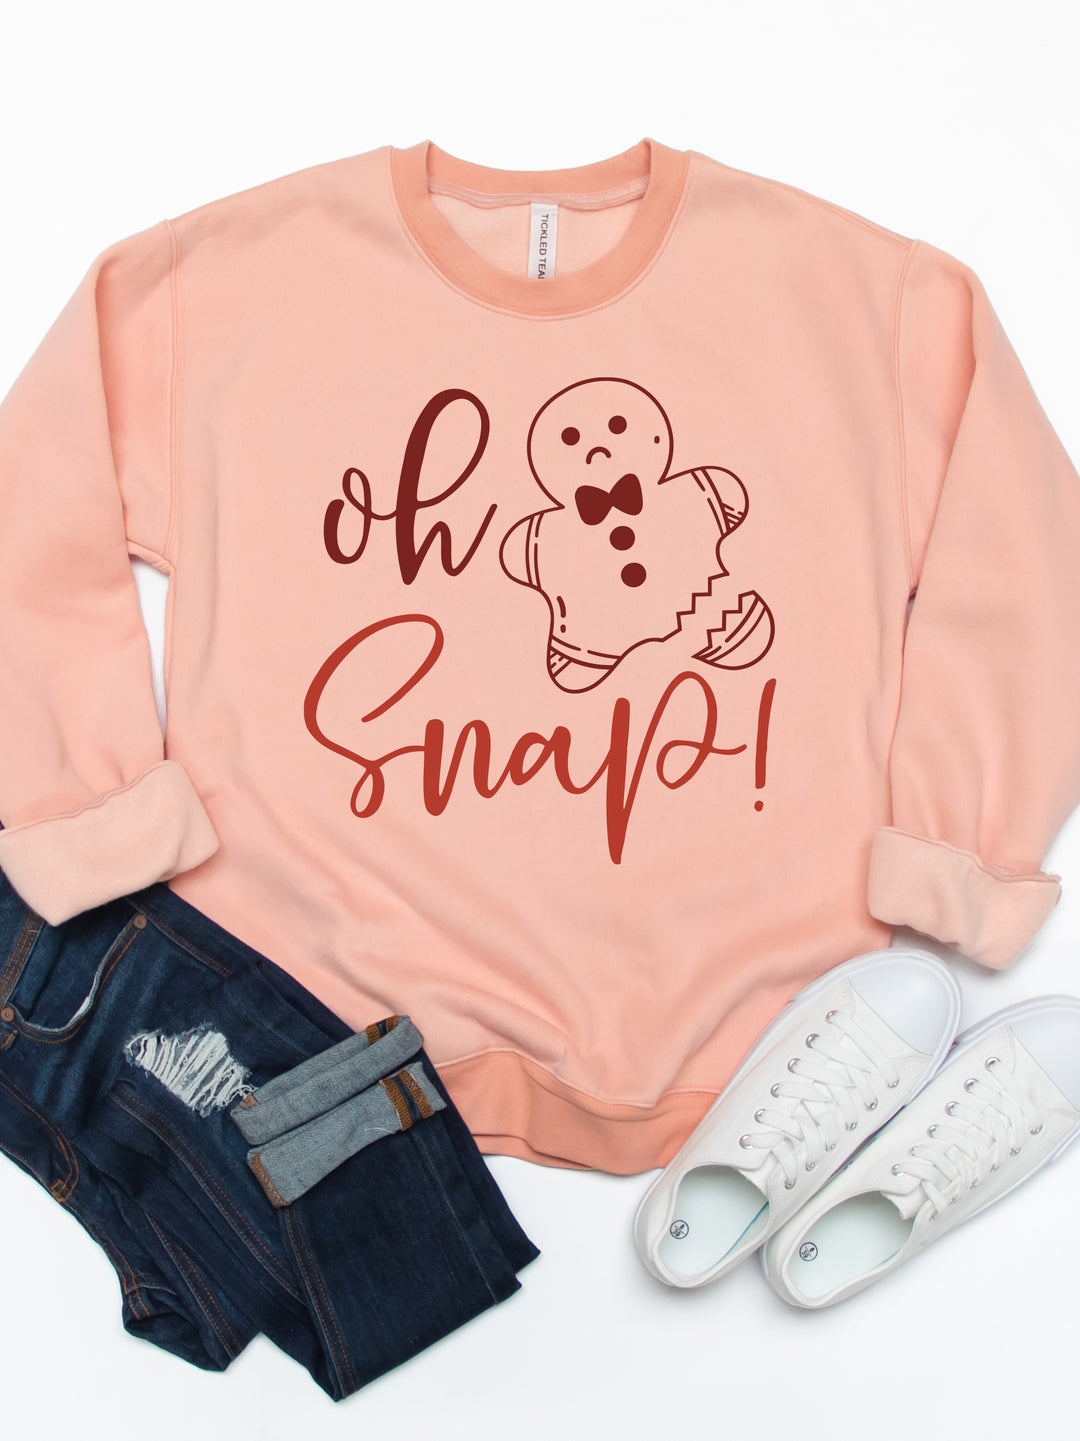 Oh Snap Gingerbread - Christmas Graphic Sweatshirt